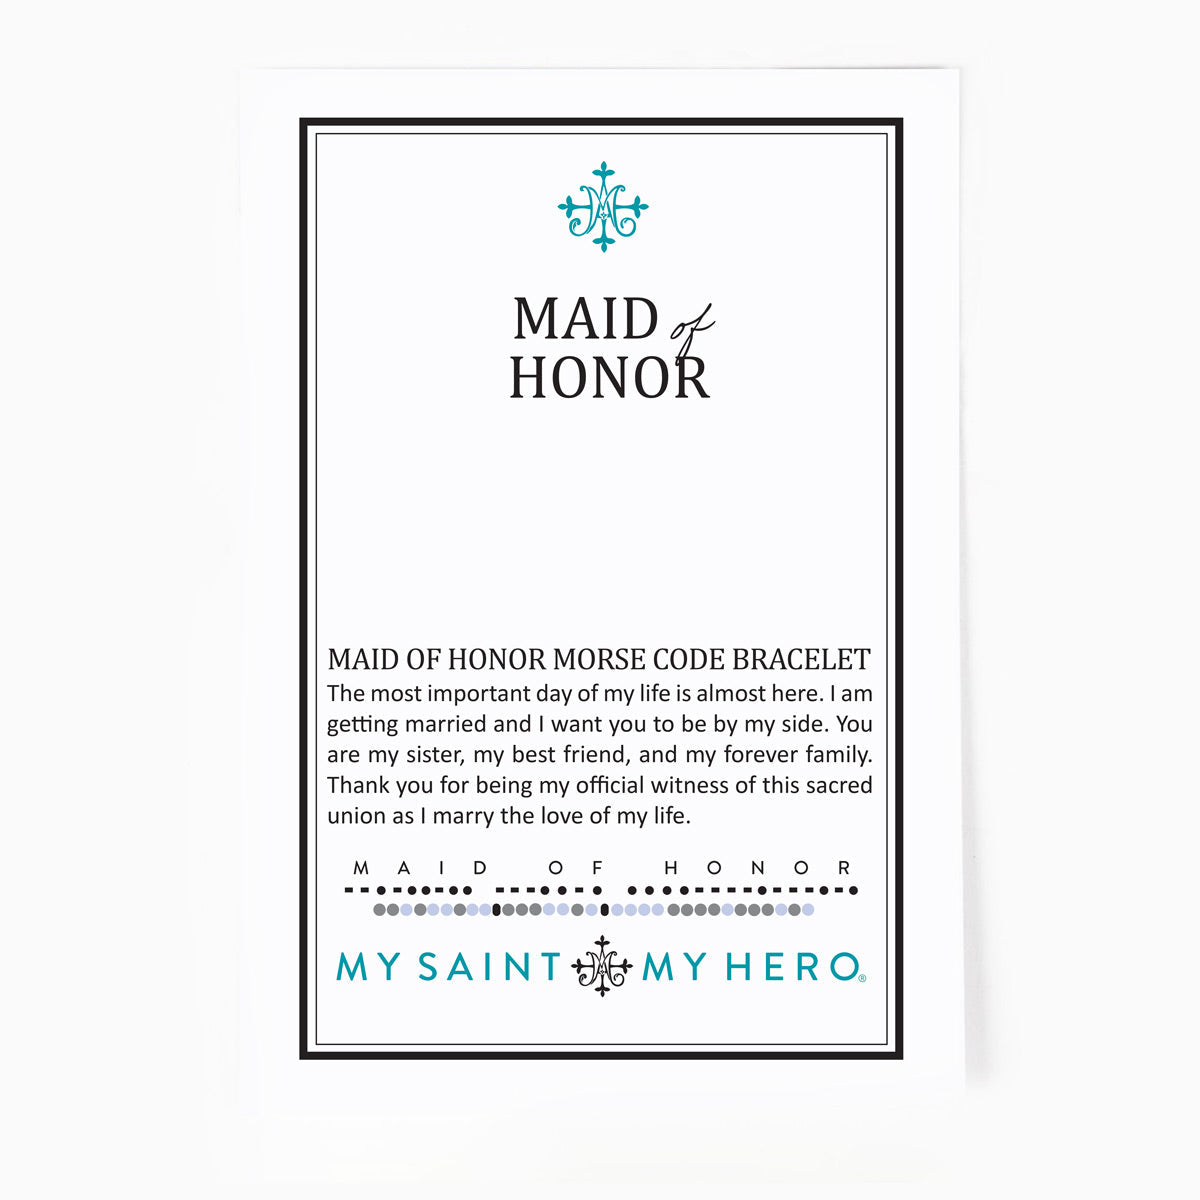 Maid of Honor Morse Code Bracelet